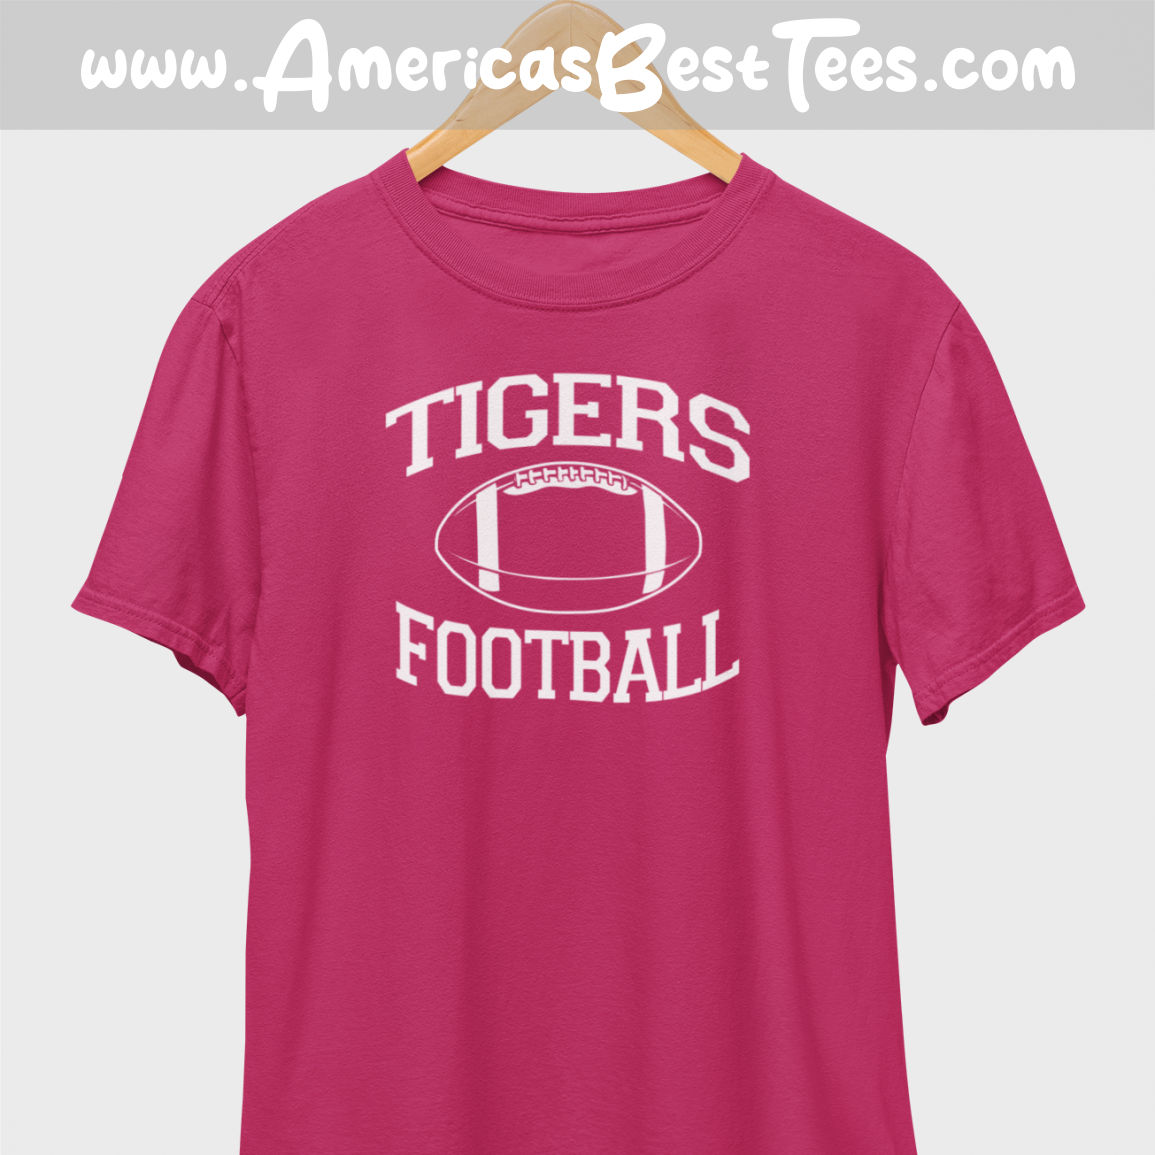 Tigers Football White Print T-Shirt